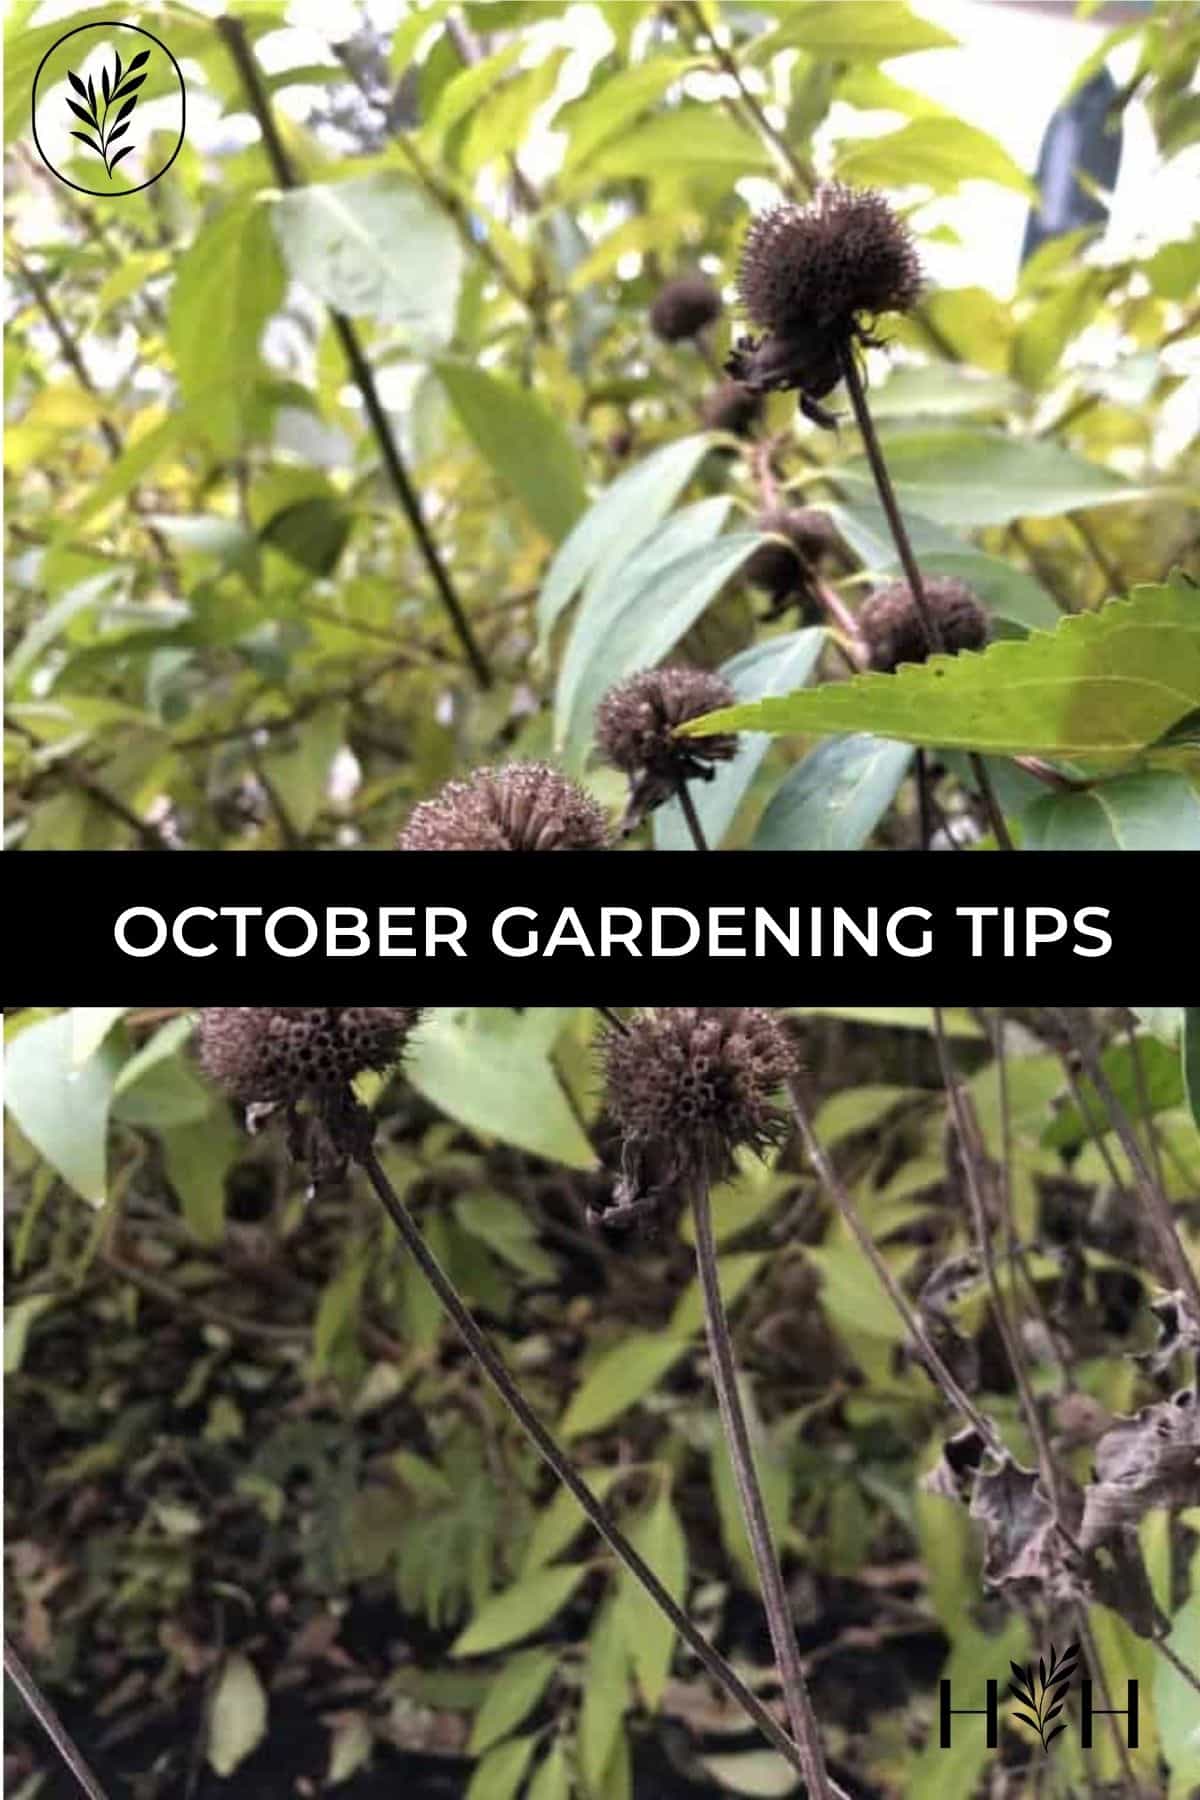 October gardening tips via @home4theharvest